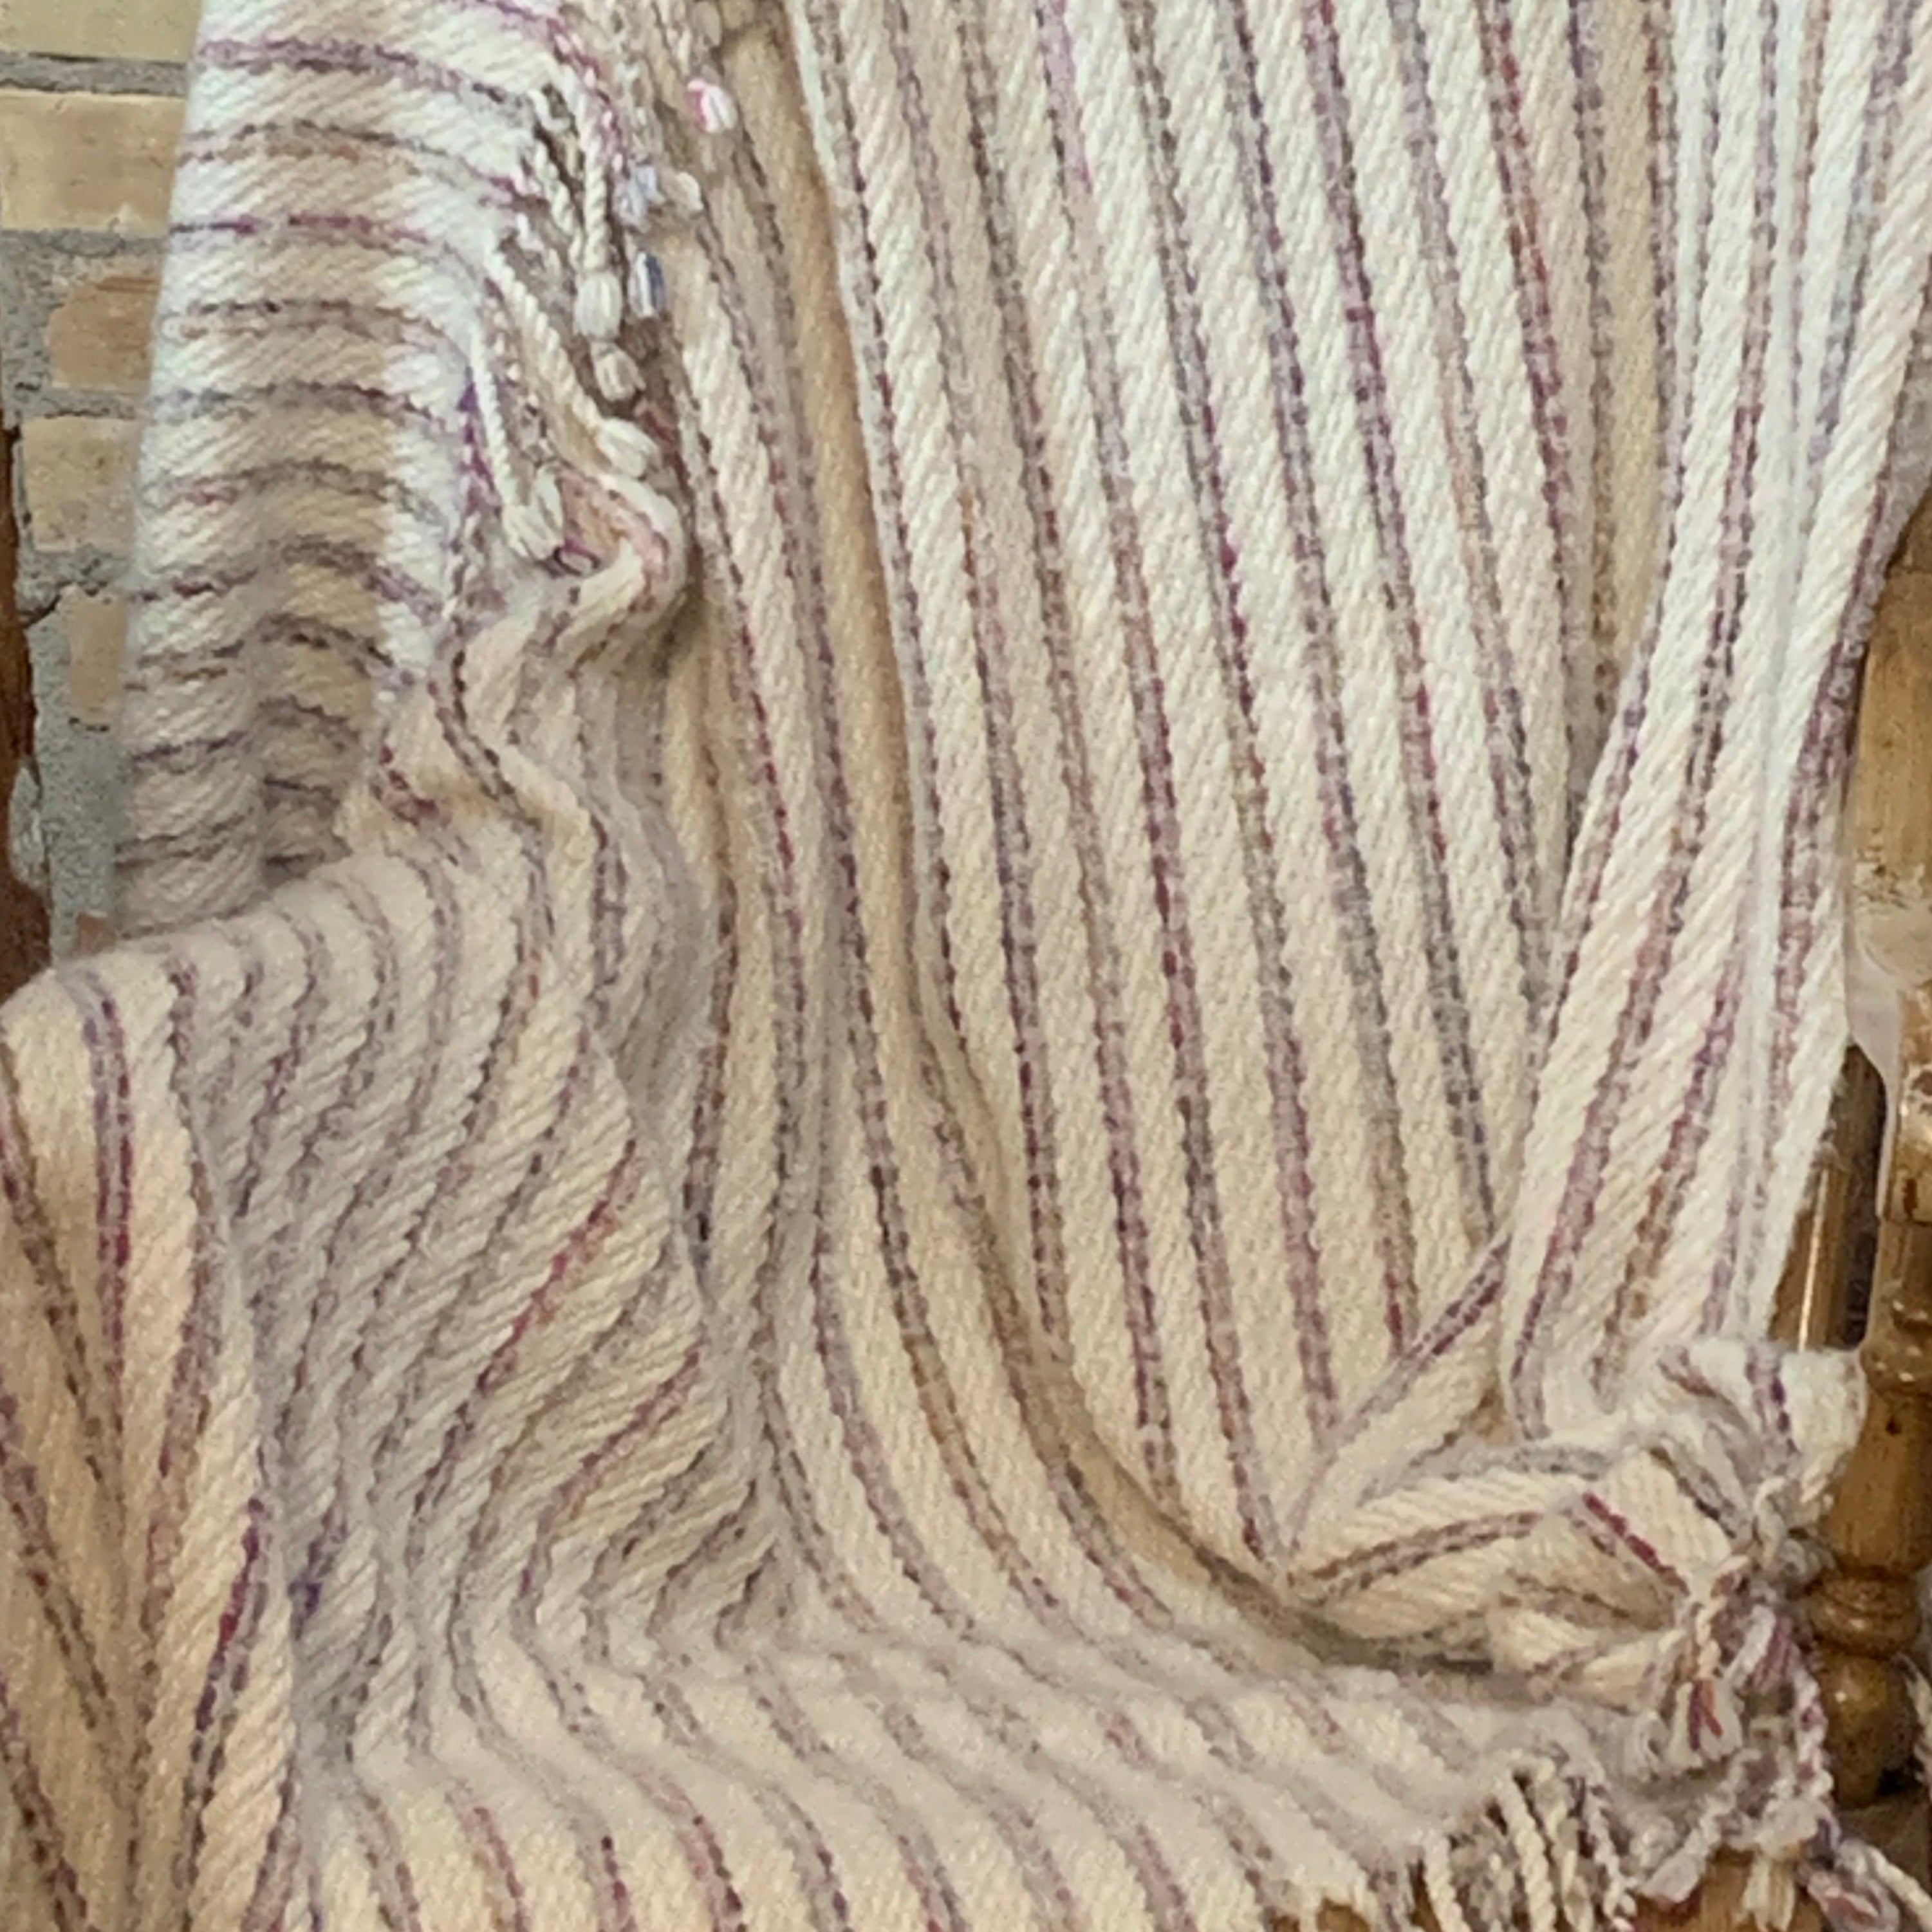 Lap Blanket (Natural White, Multi-coloured Accent Stripes)